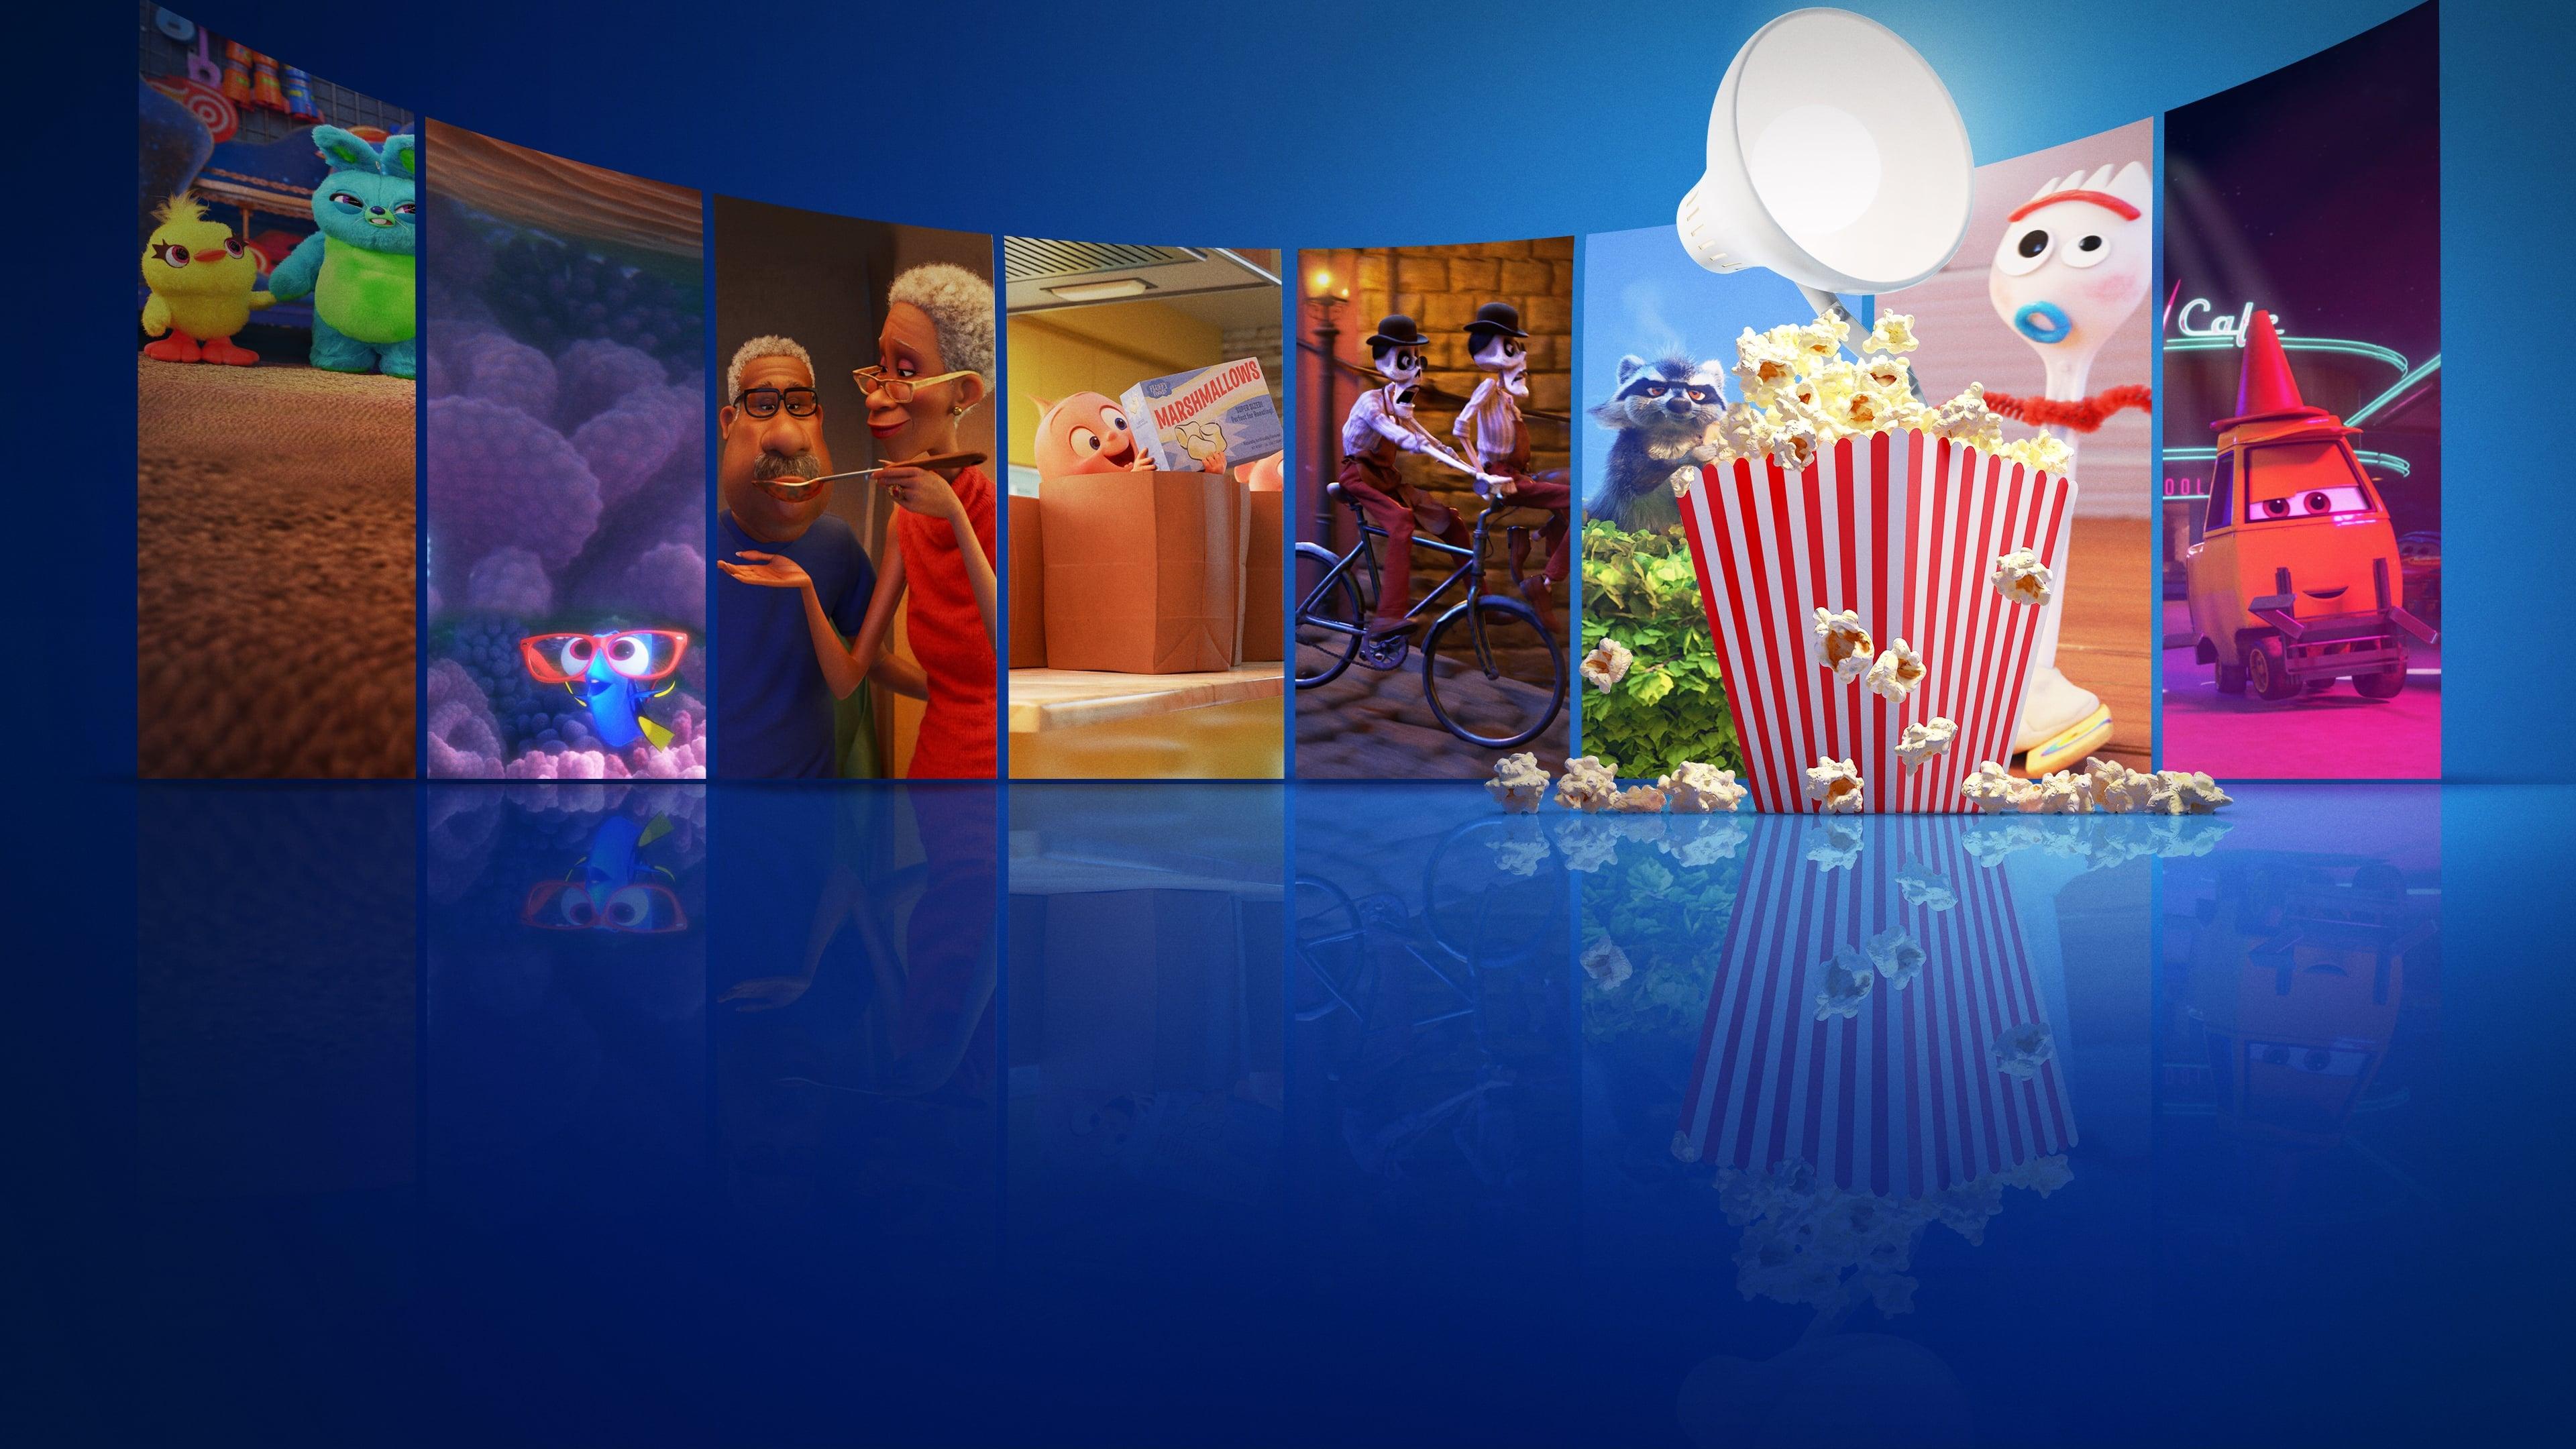 Pixar Popcorn backdrop